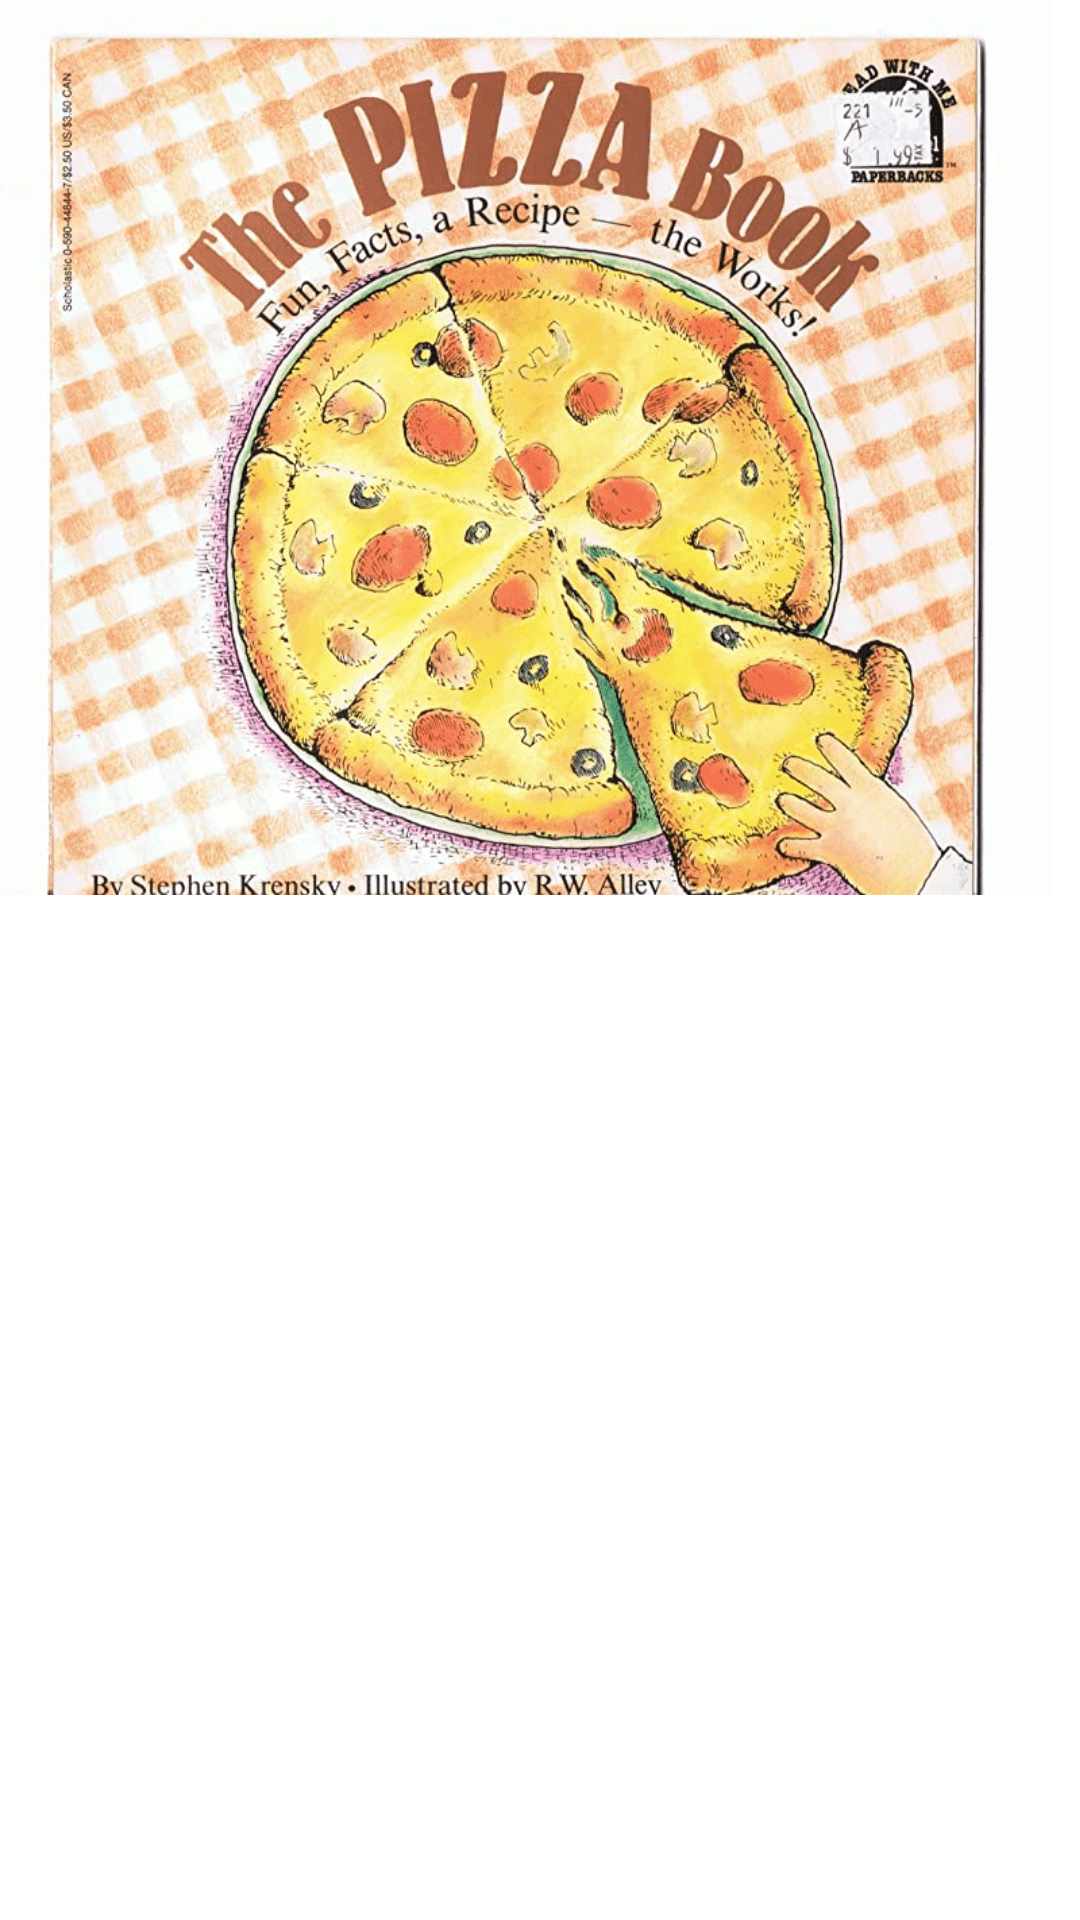 The Pizza Book by Stephen Krensky